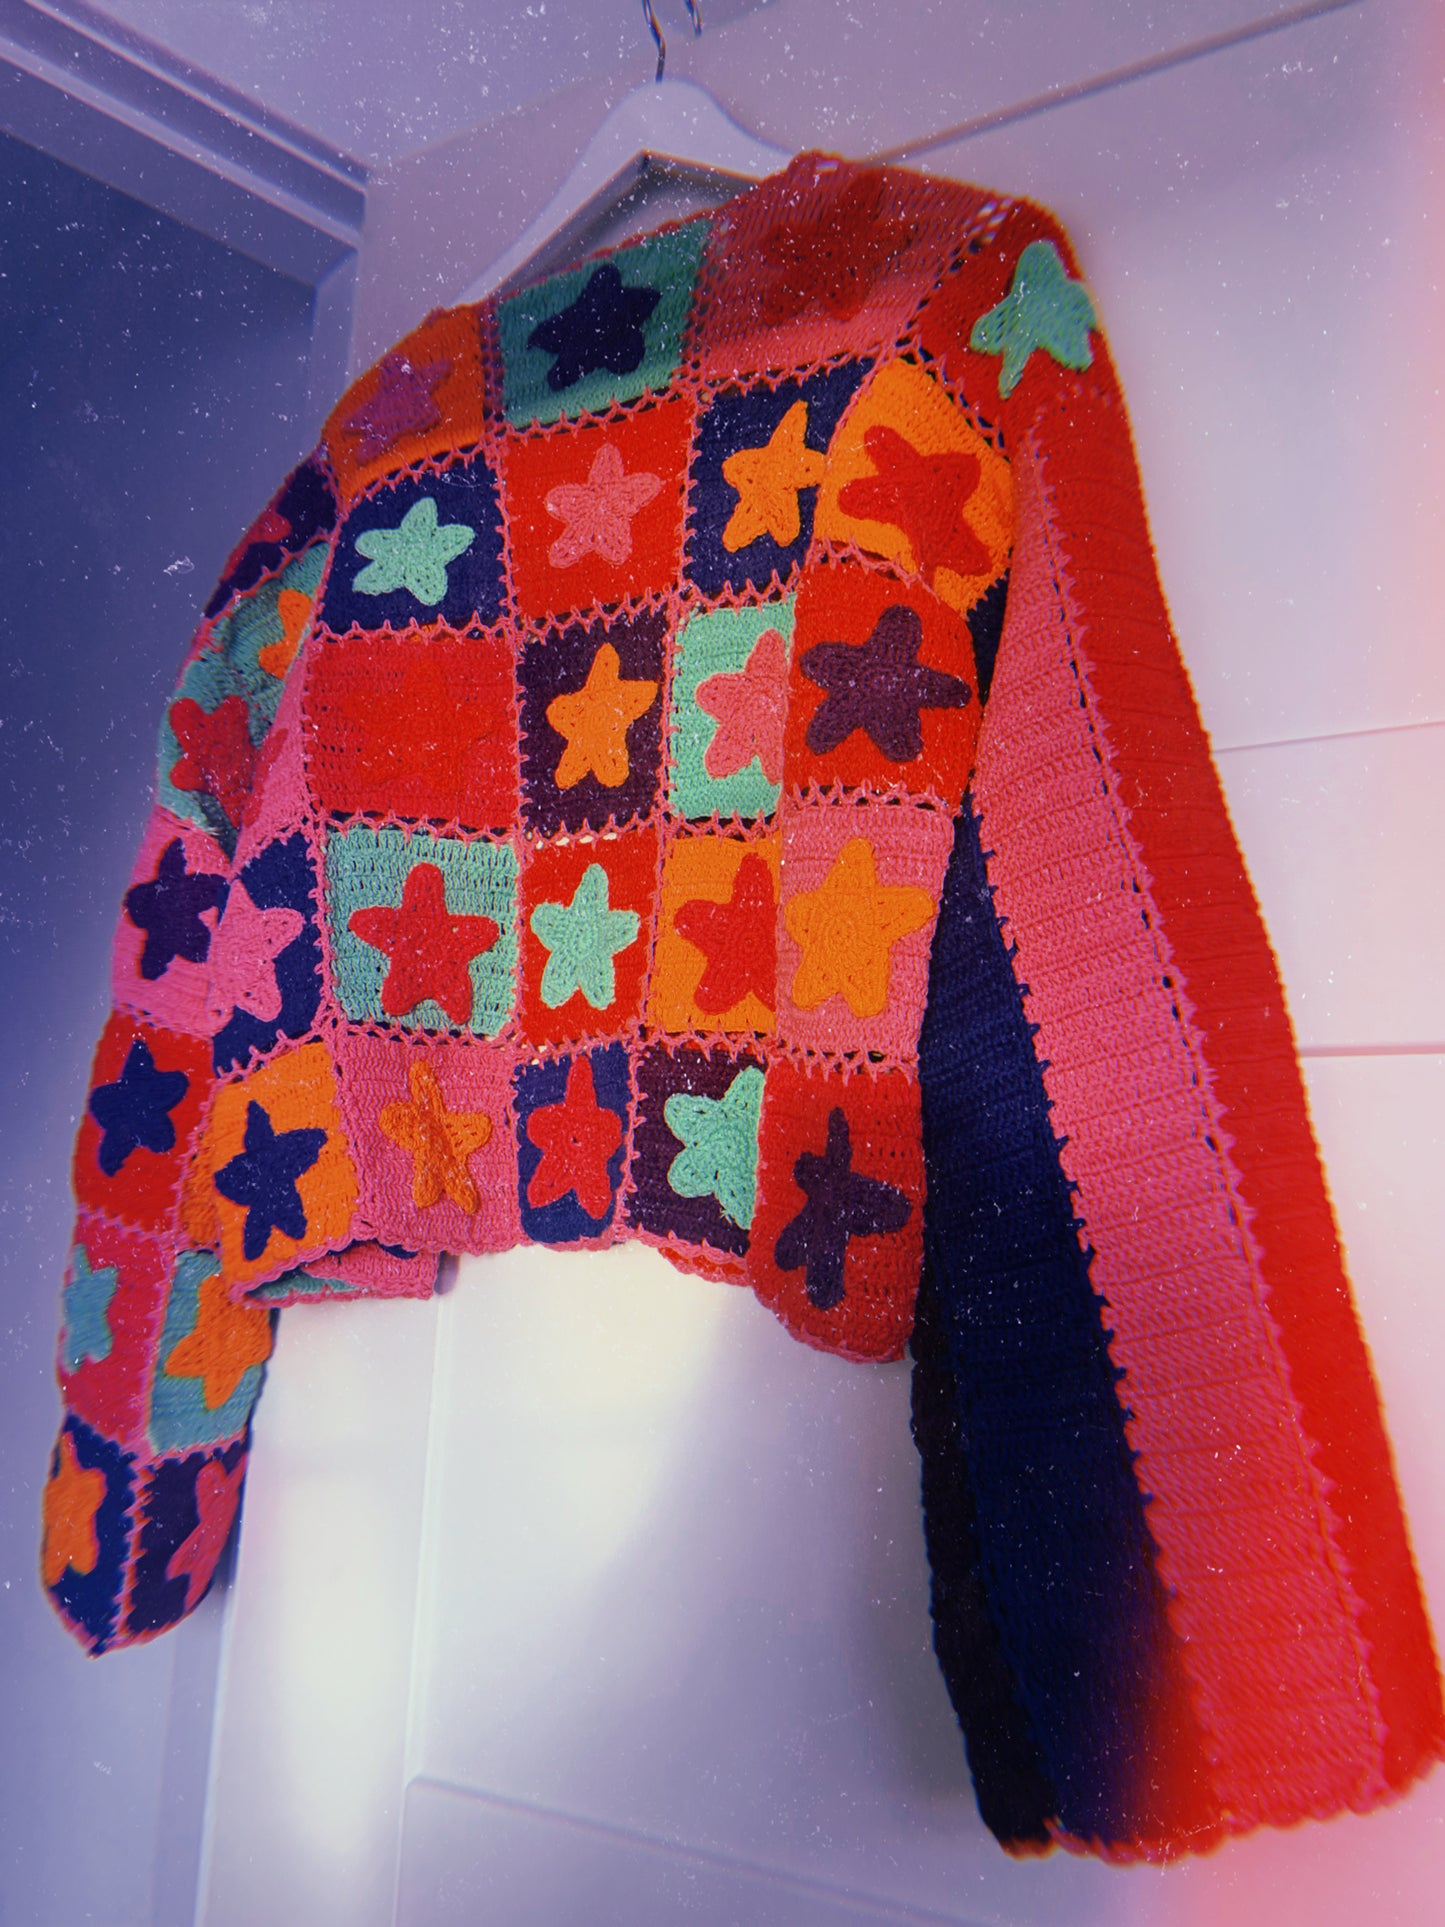 Stardust Multicoloured Crochet Star Cardigan